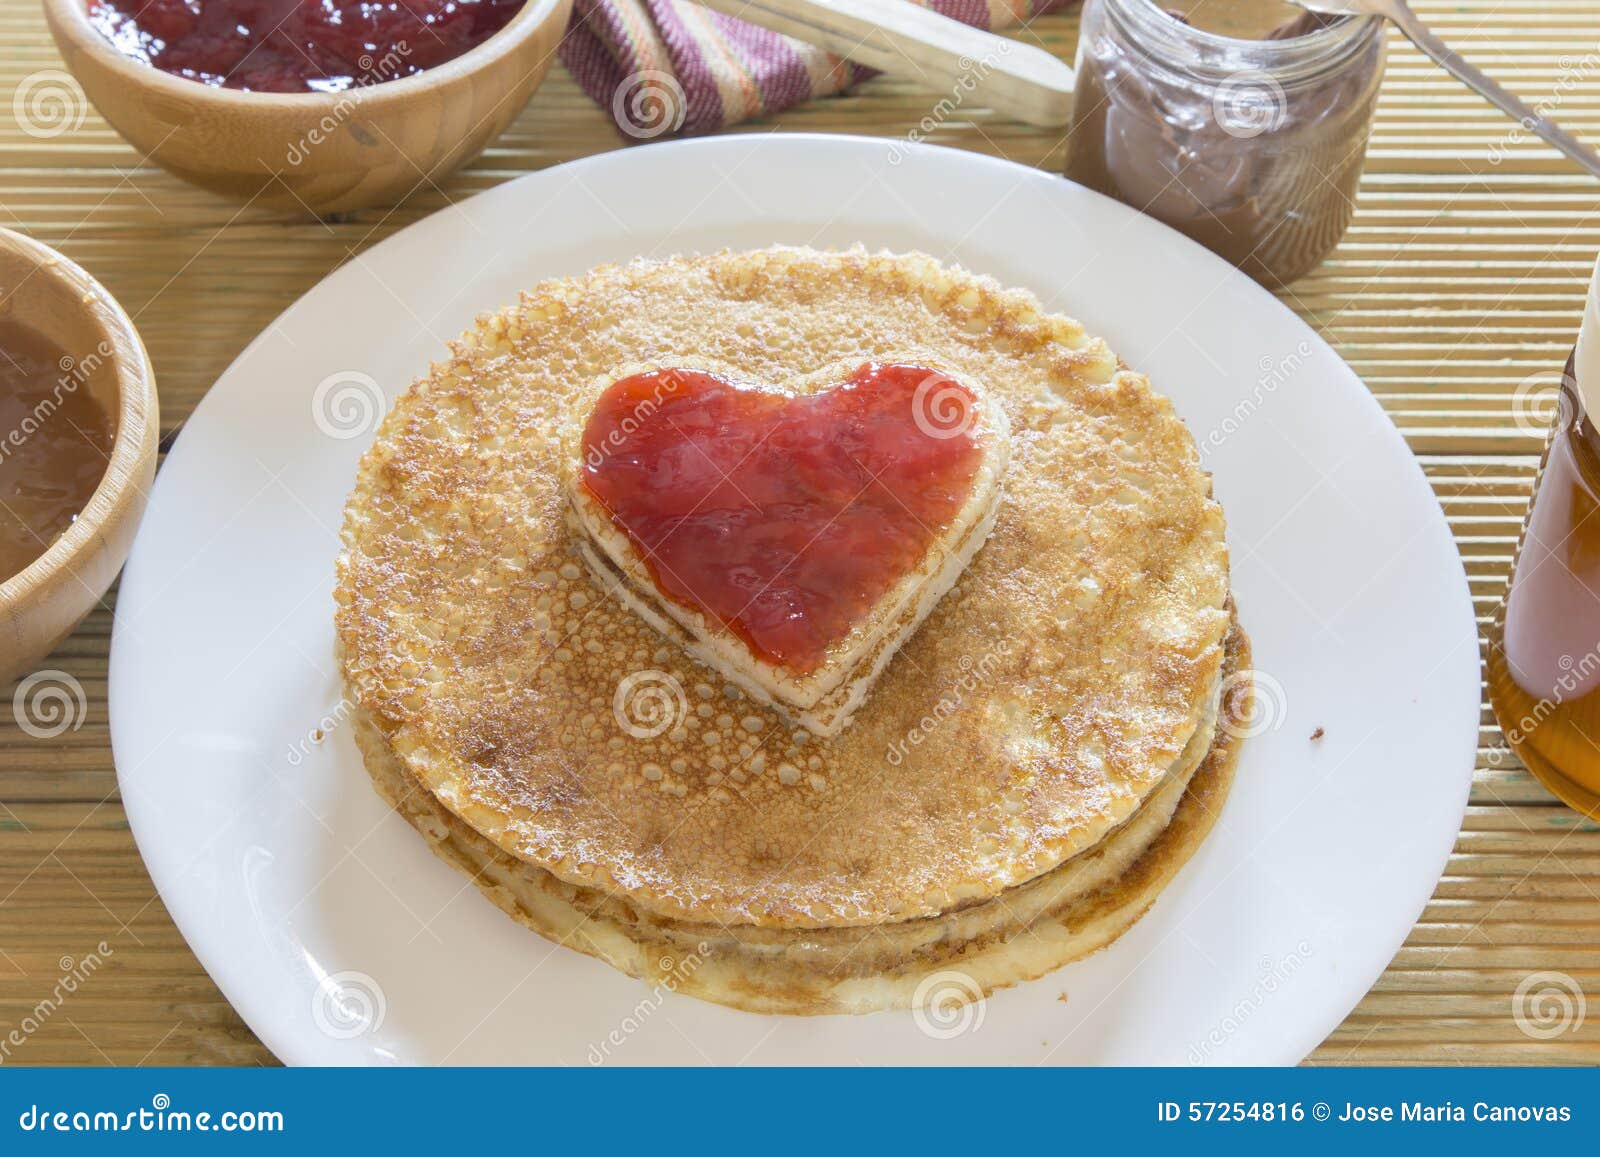 I Love Pancakes. Heart Shaped Pancake with Strawberry Jam Stock Photo ...